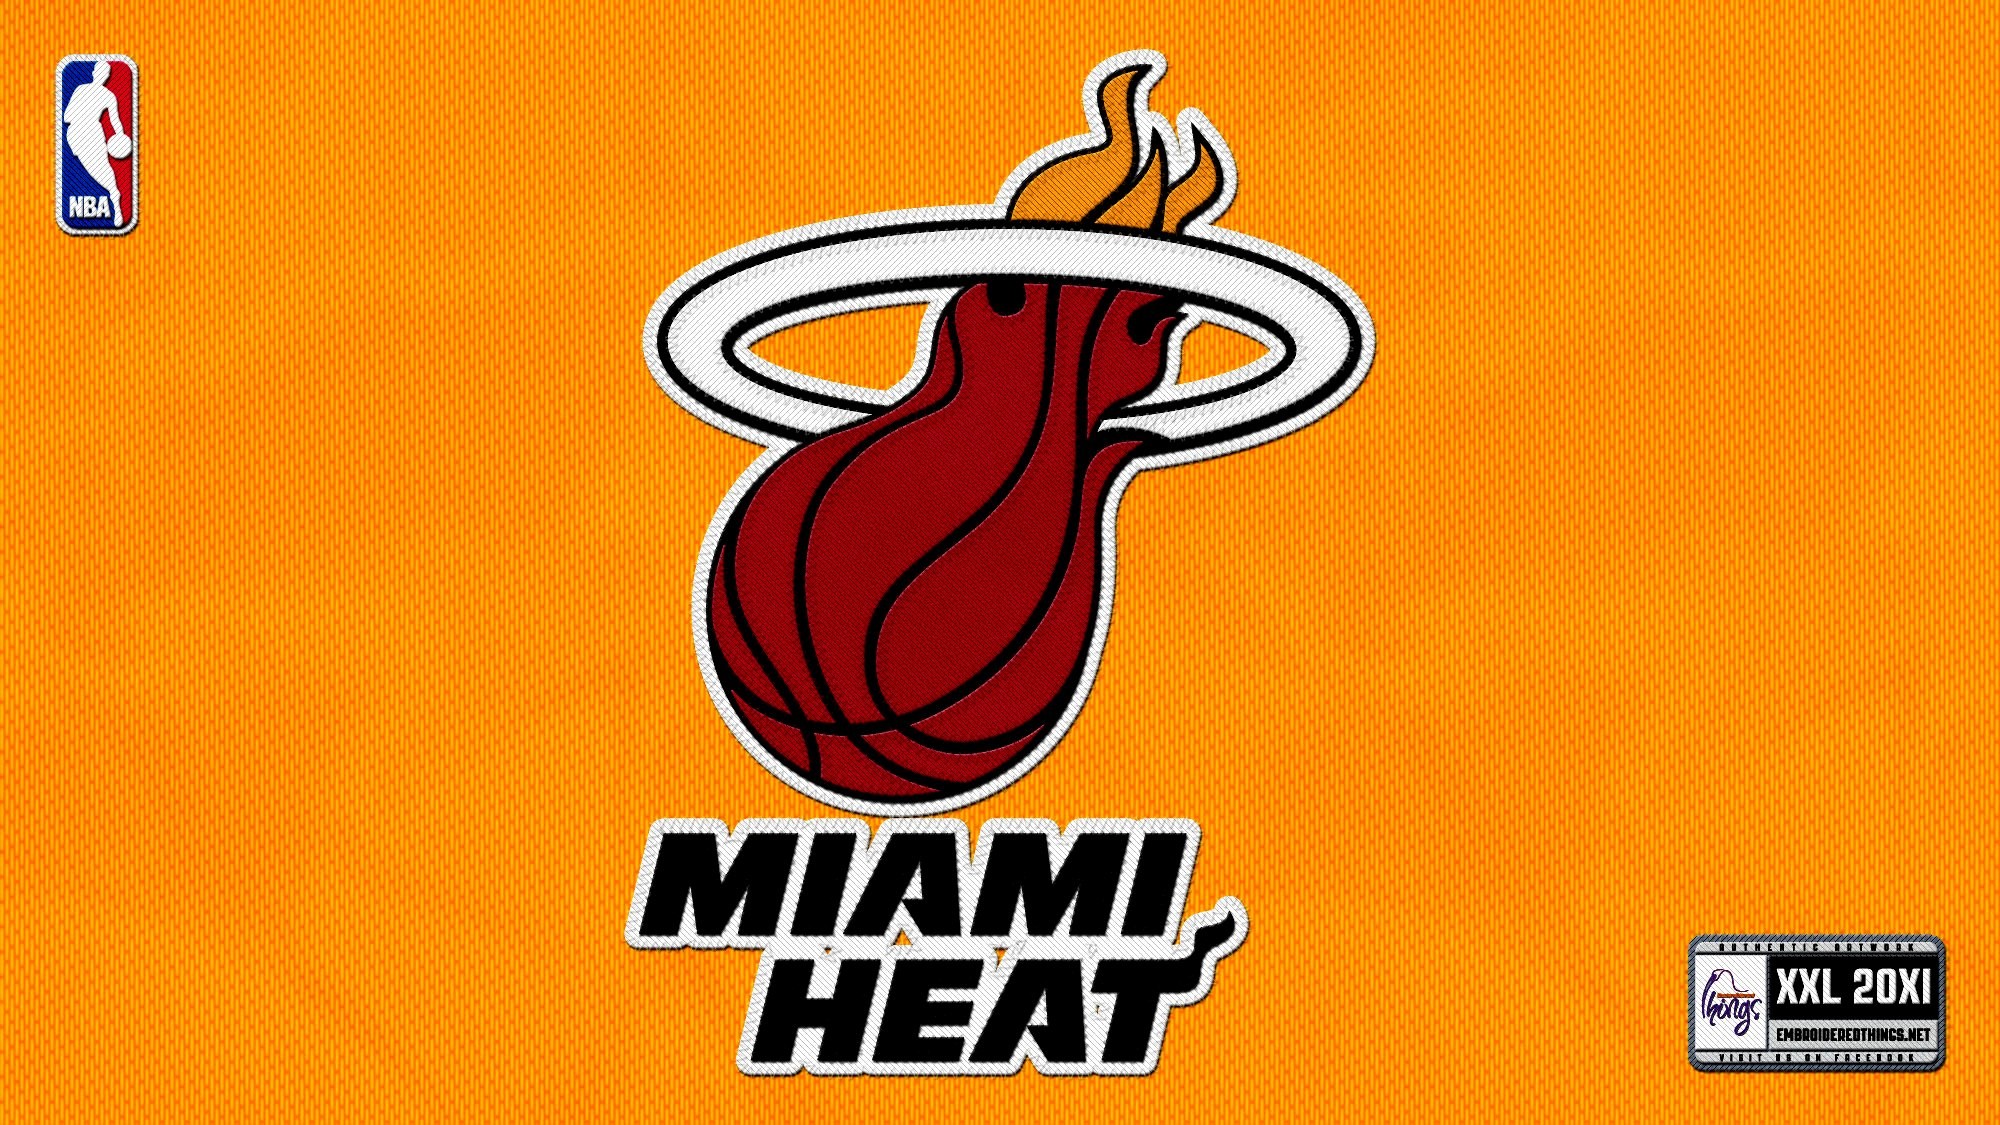 2000x1125 Miami Heat Logo Free Large Images